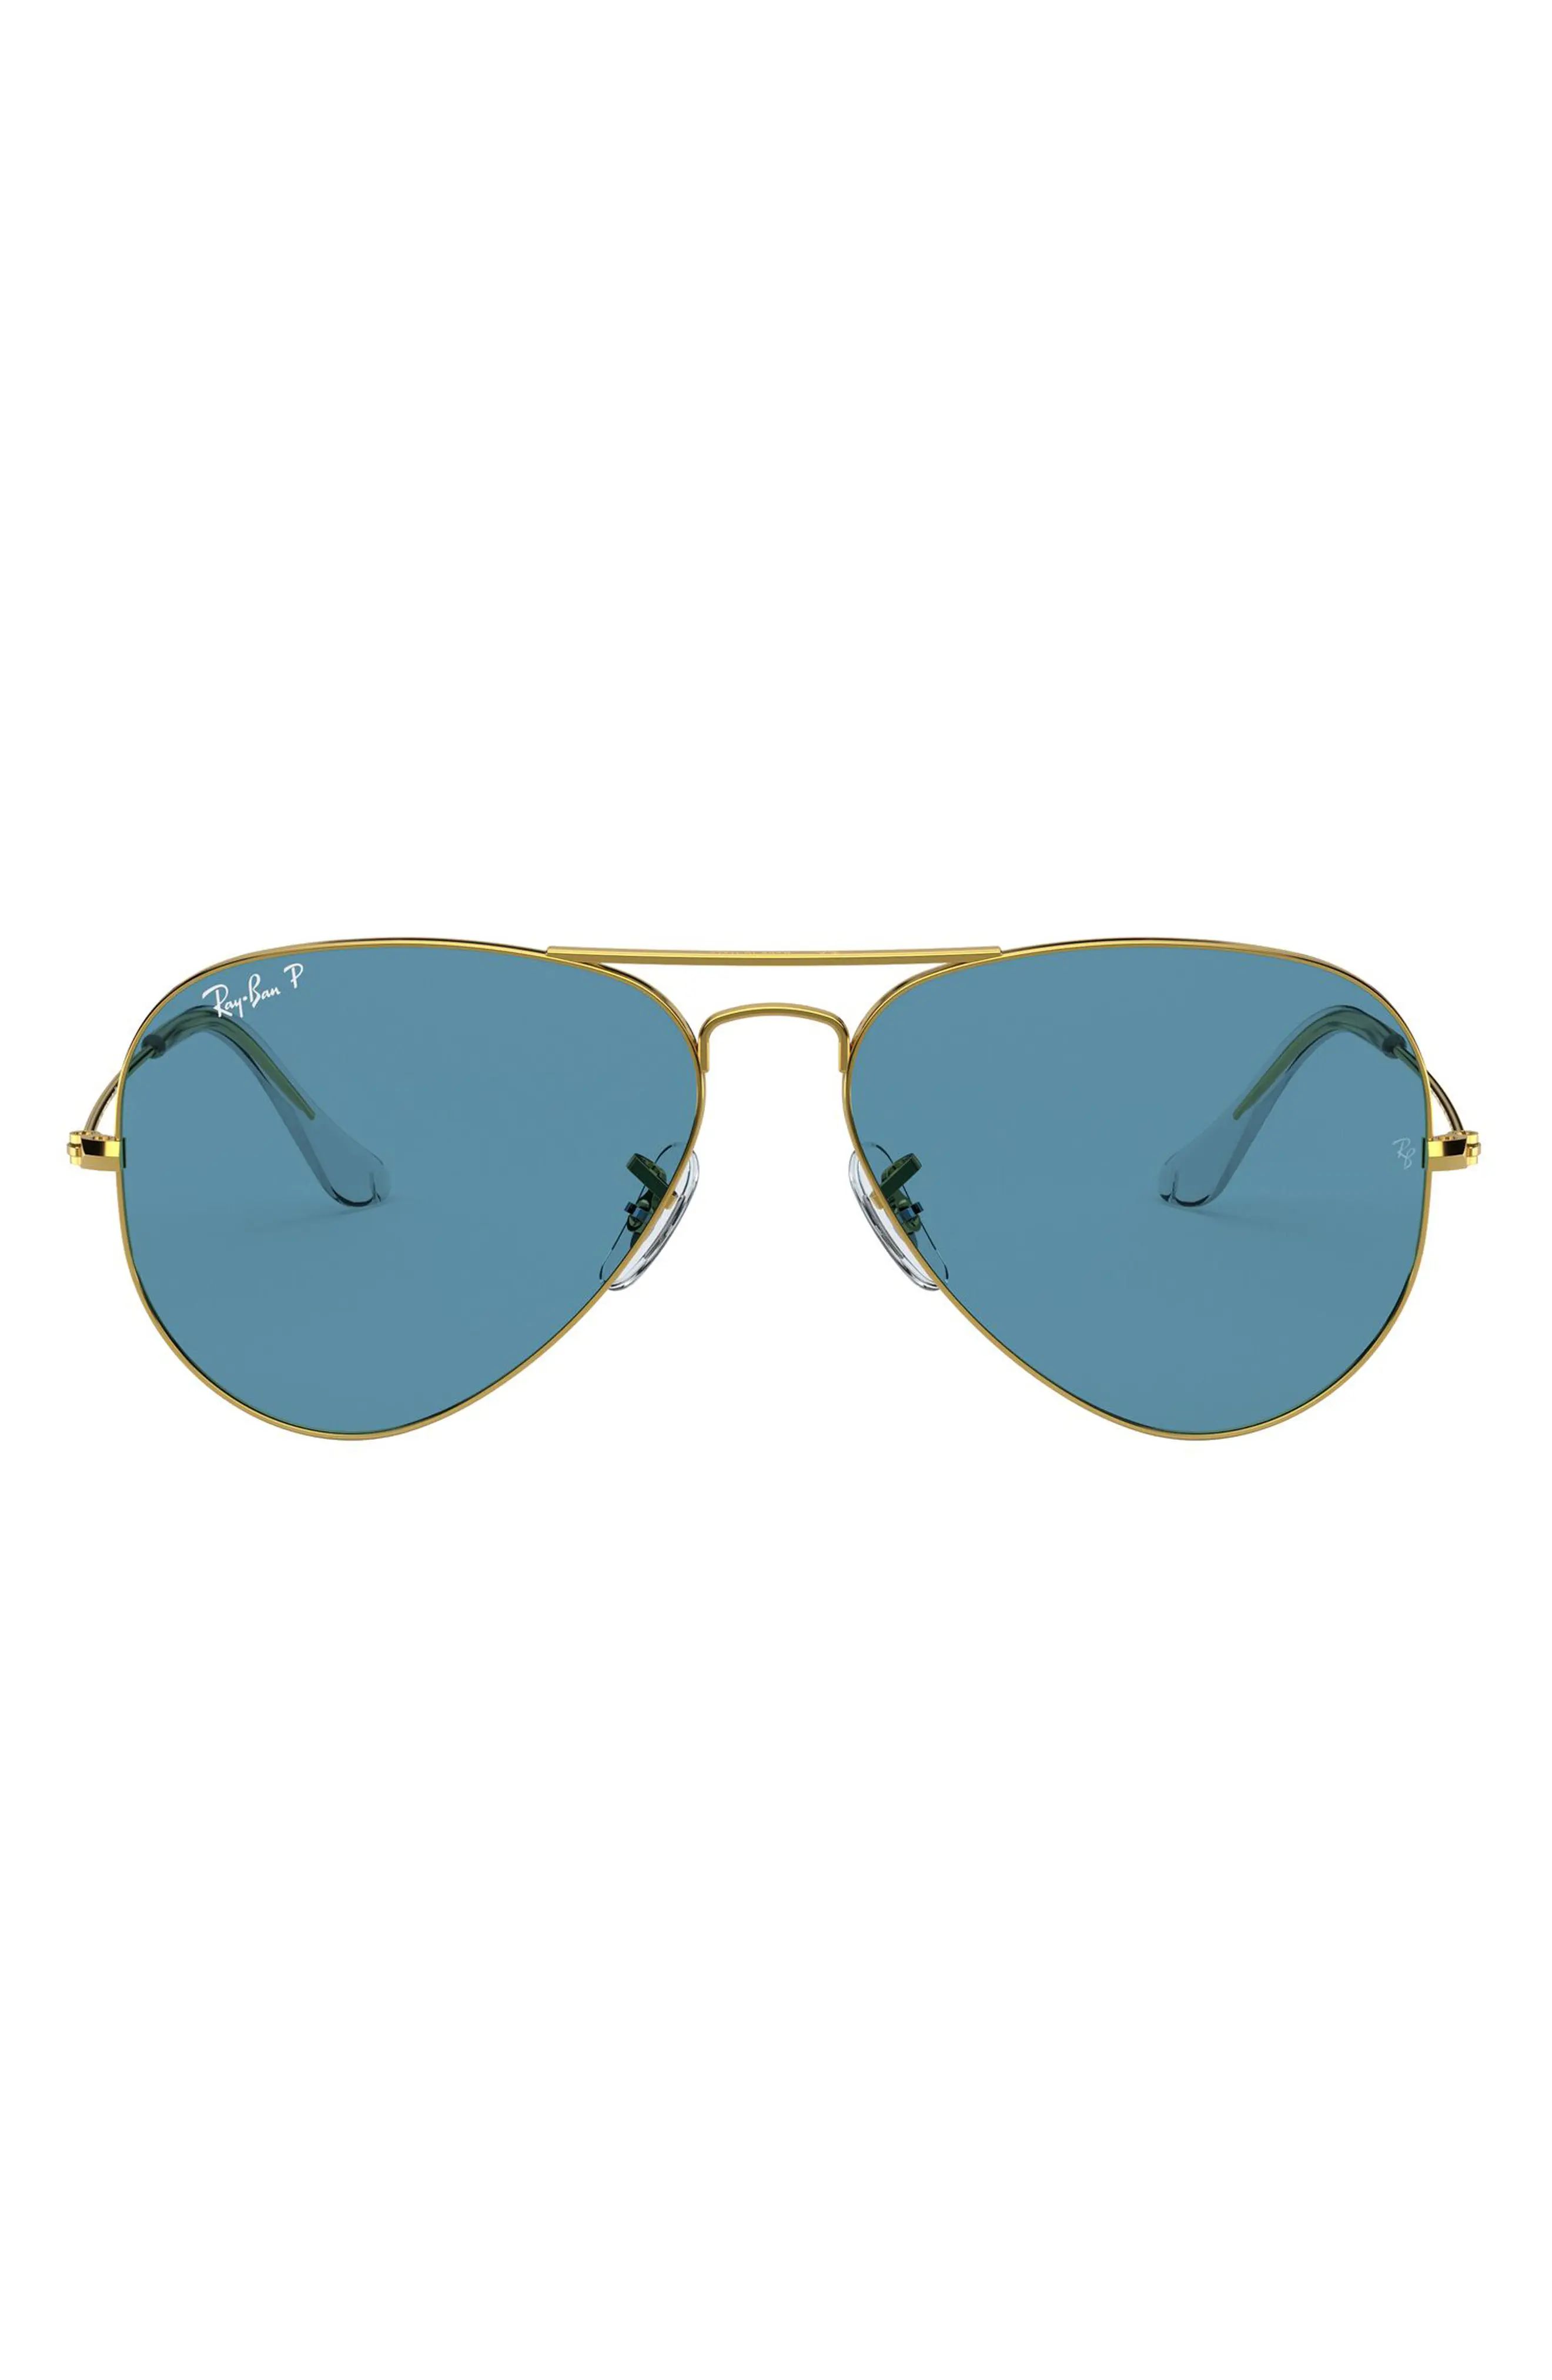 Women's Ray-Ban Aviator 55mm Sunglasses - Blue Gold | Nordstrom